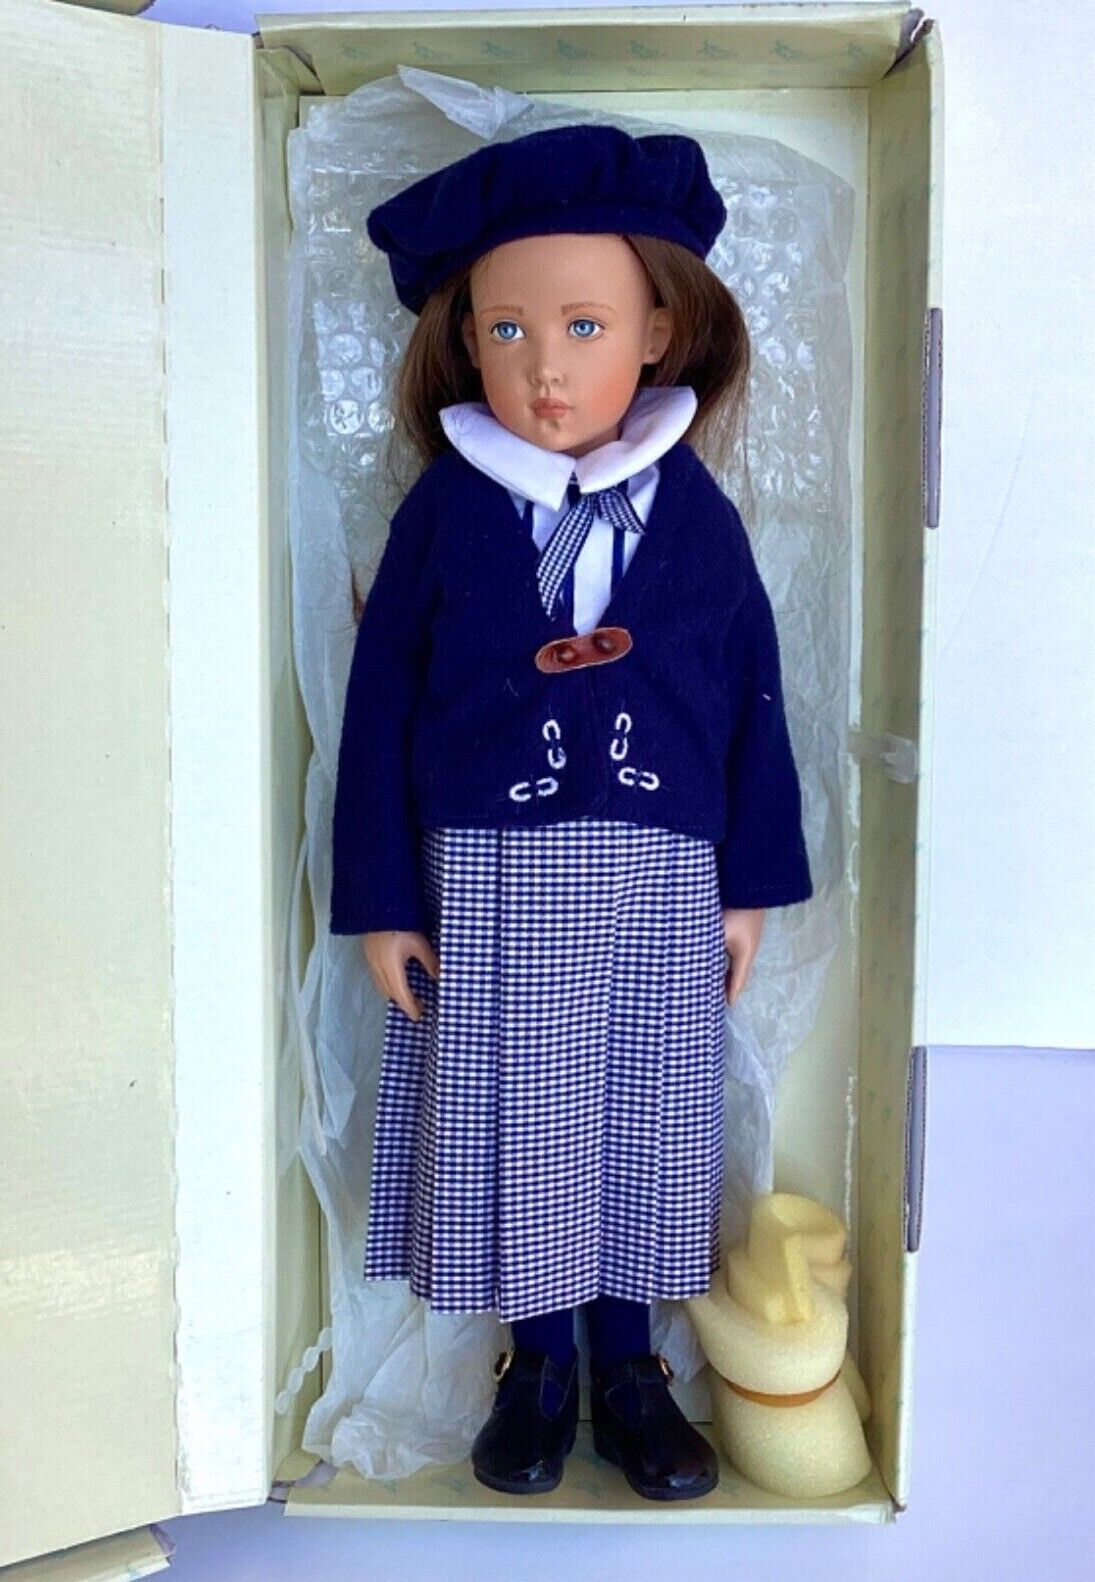 Kathy School 16” Vinyl Doll by Helen Kish Original Good Condition Hard to Find